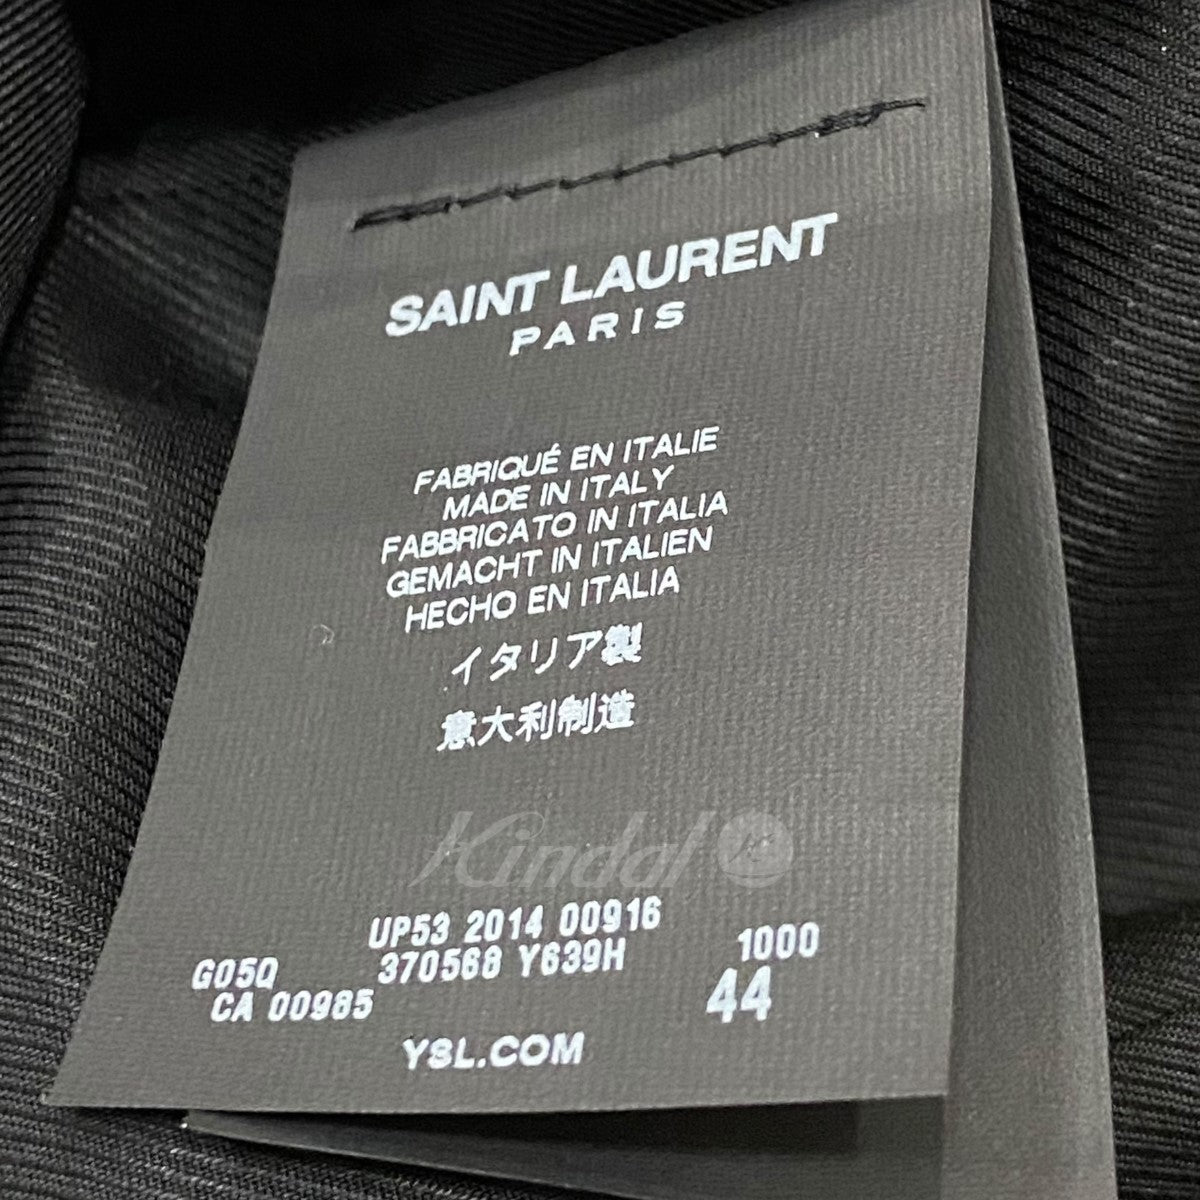 SAINT LAURENT PARIS(サンローランパリ) ベスト 370568 ブラック ...